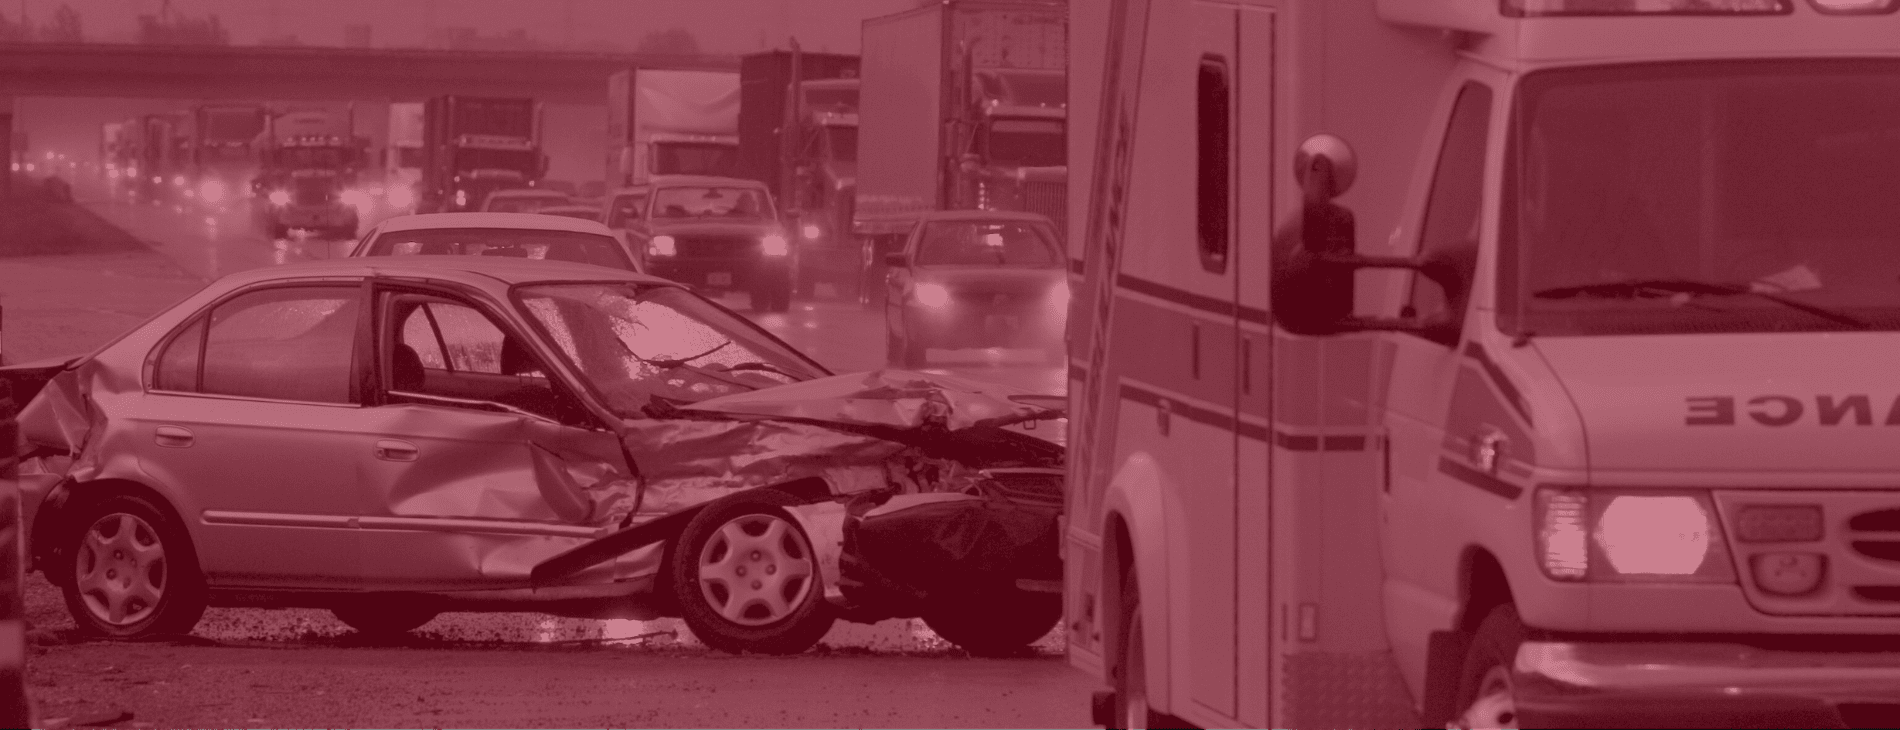 Bellflower two-car crash